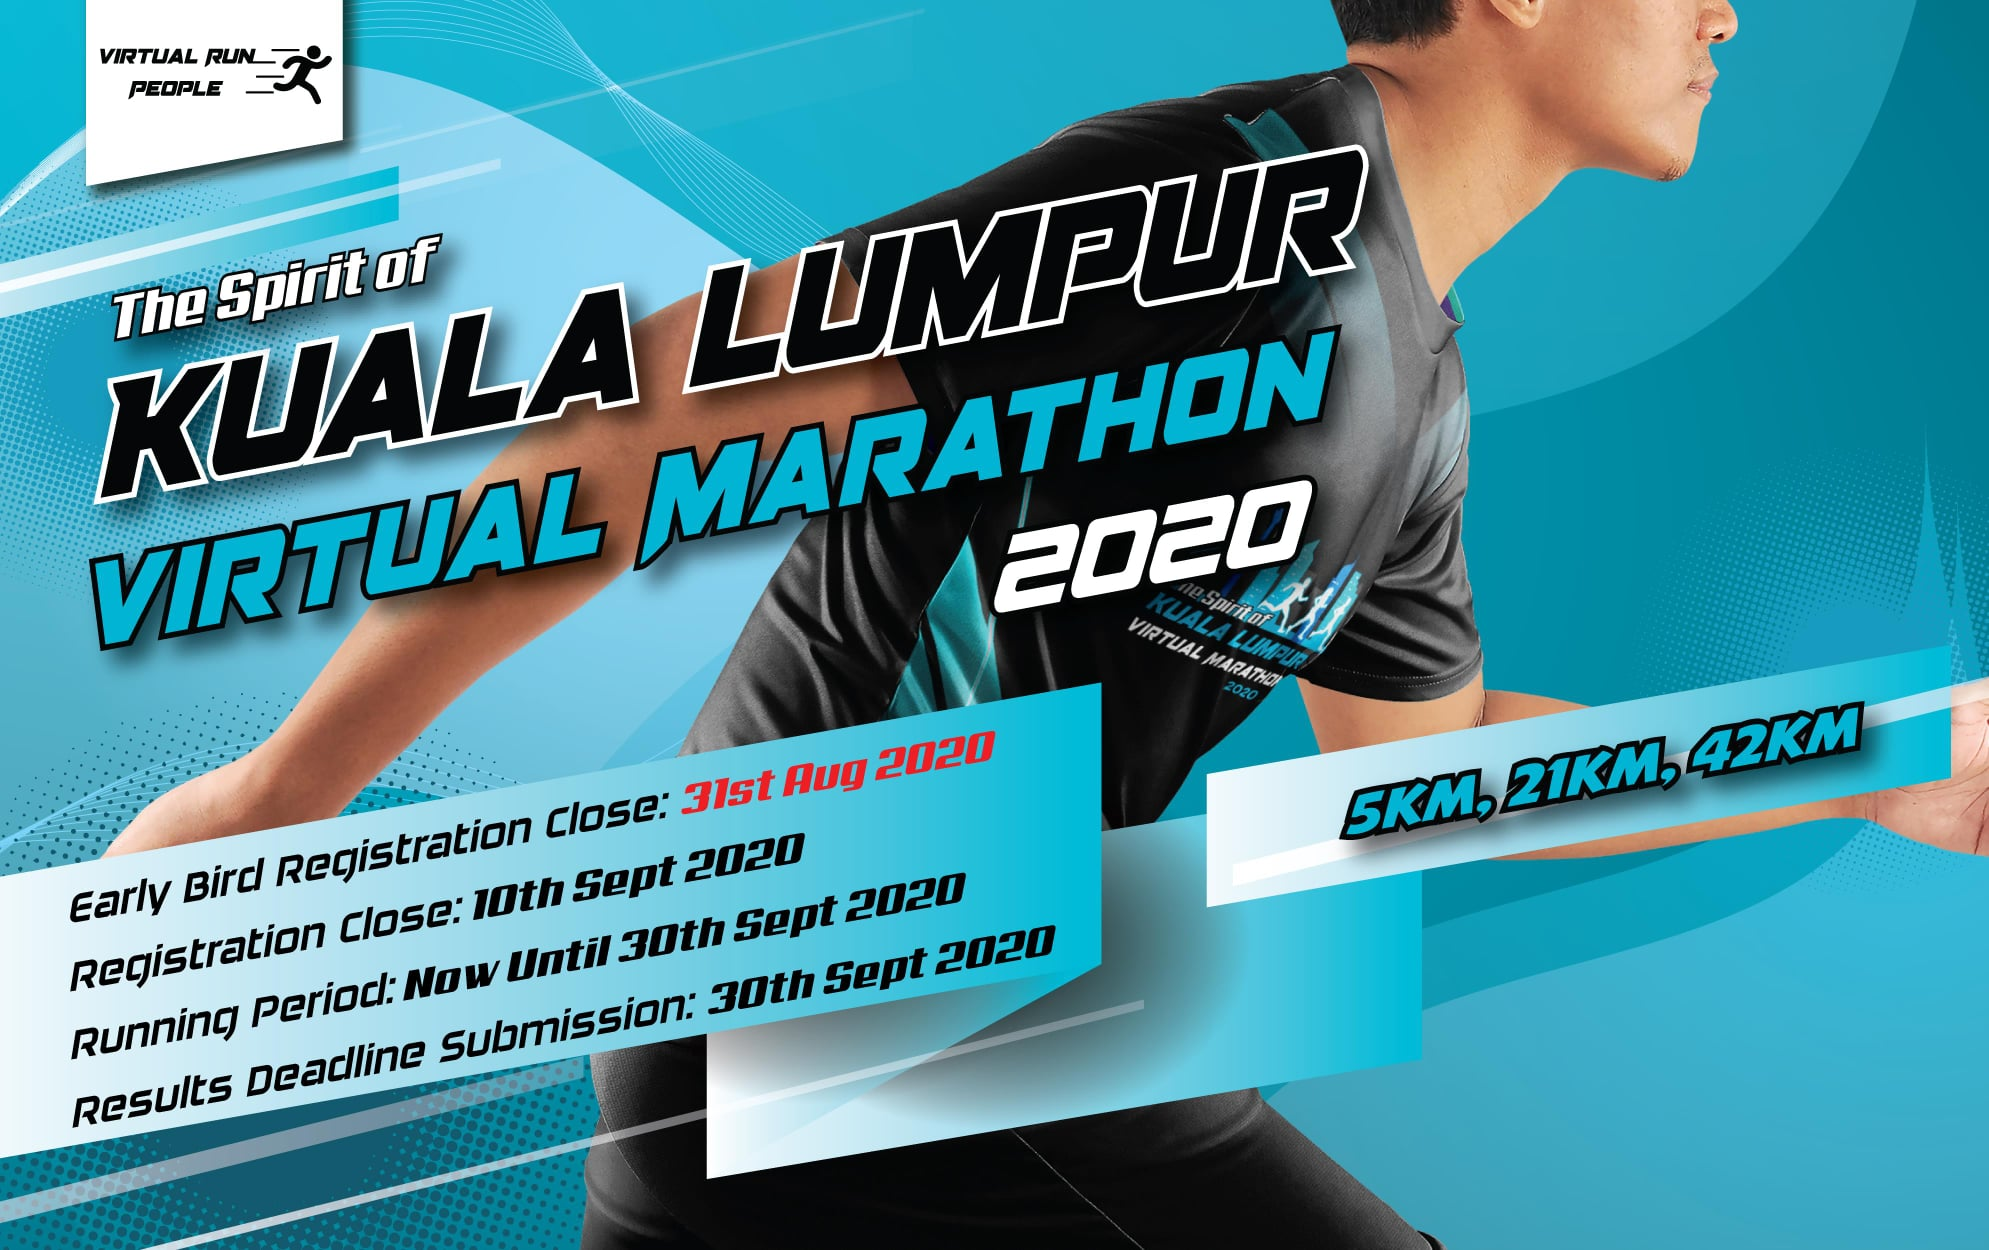 The Spirit of Kuala Lumpur Virtual Marathon 2020